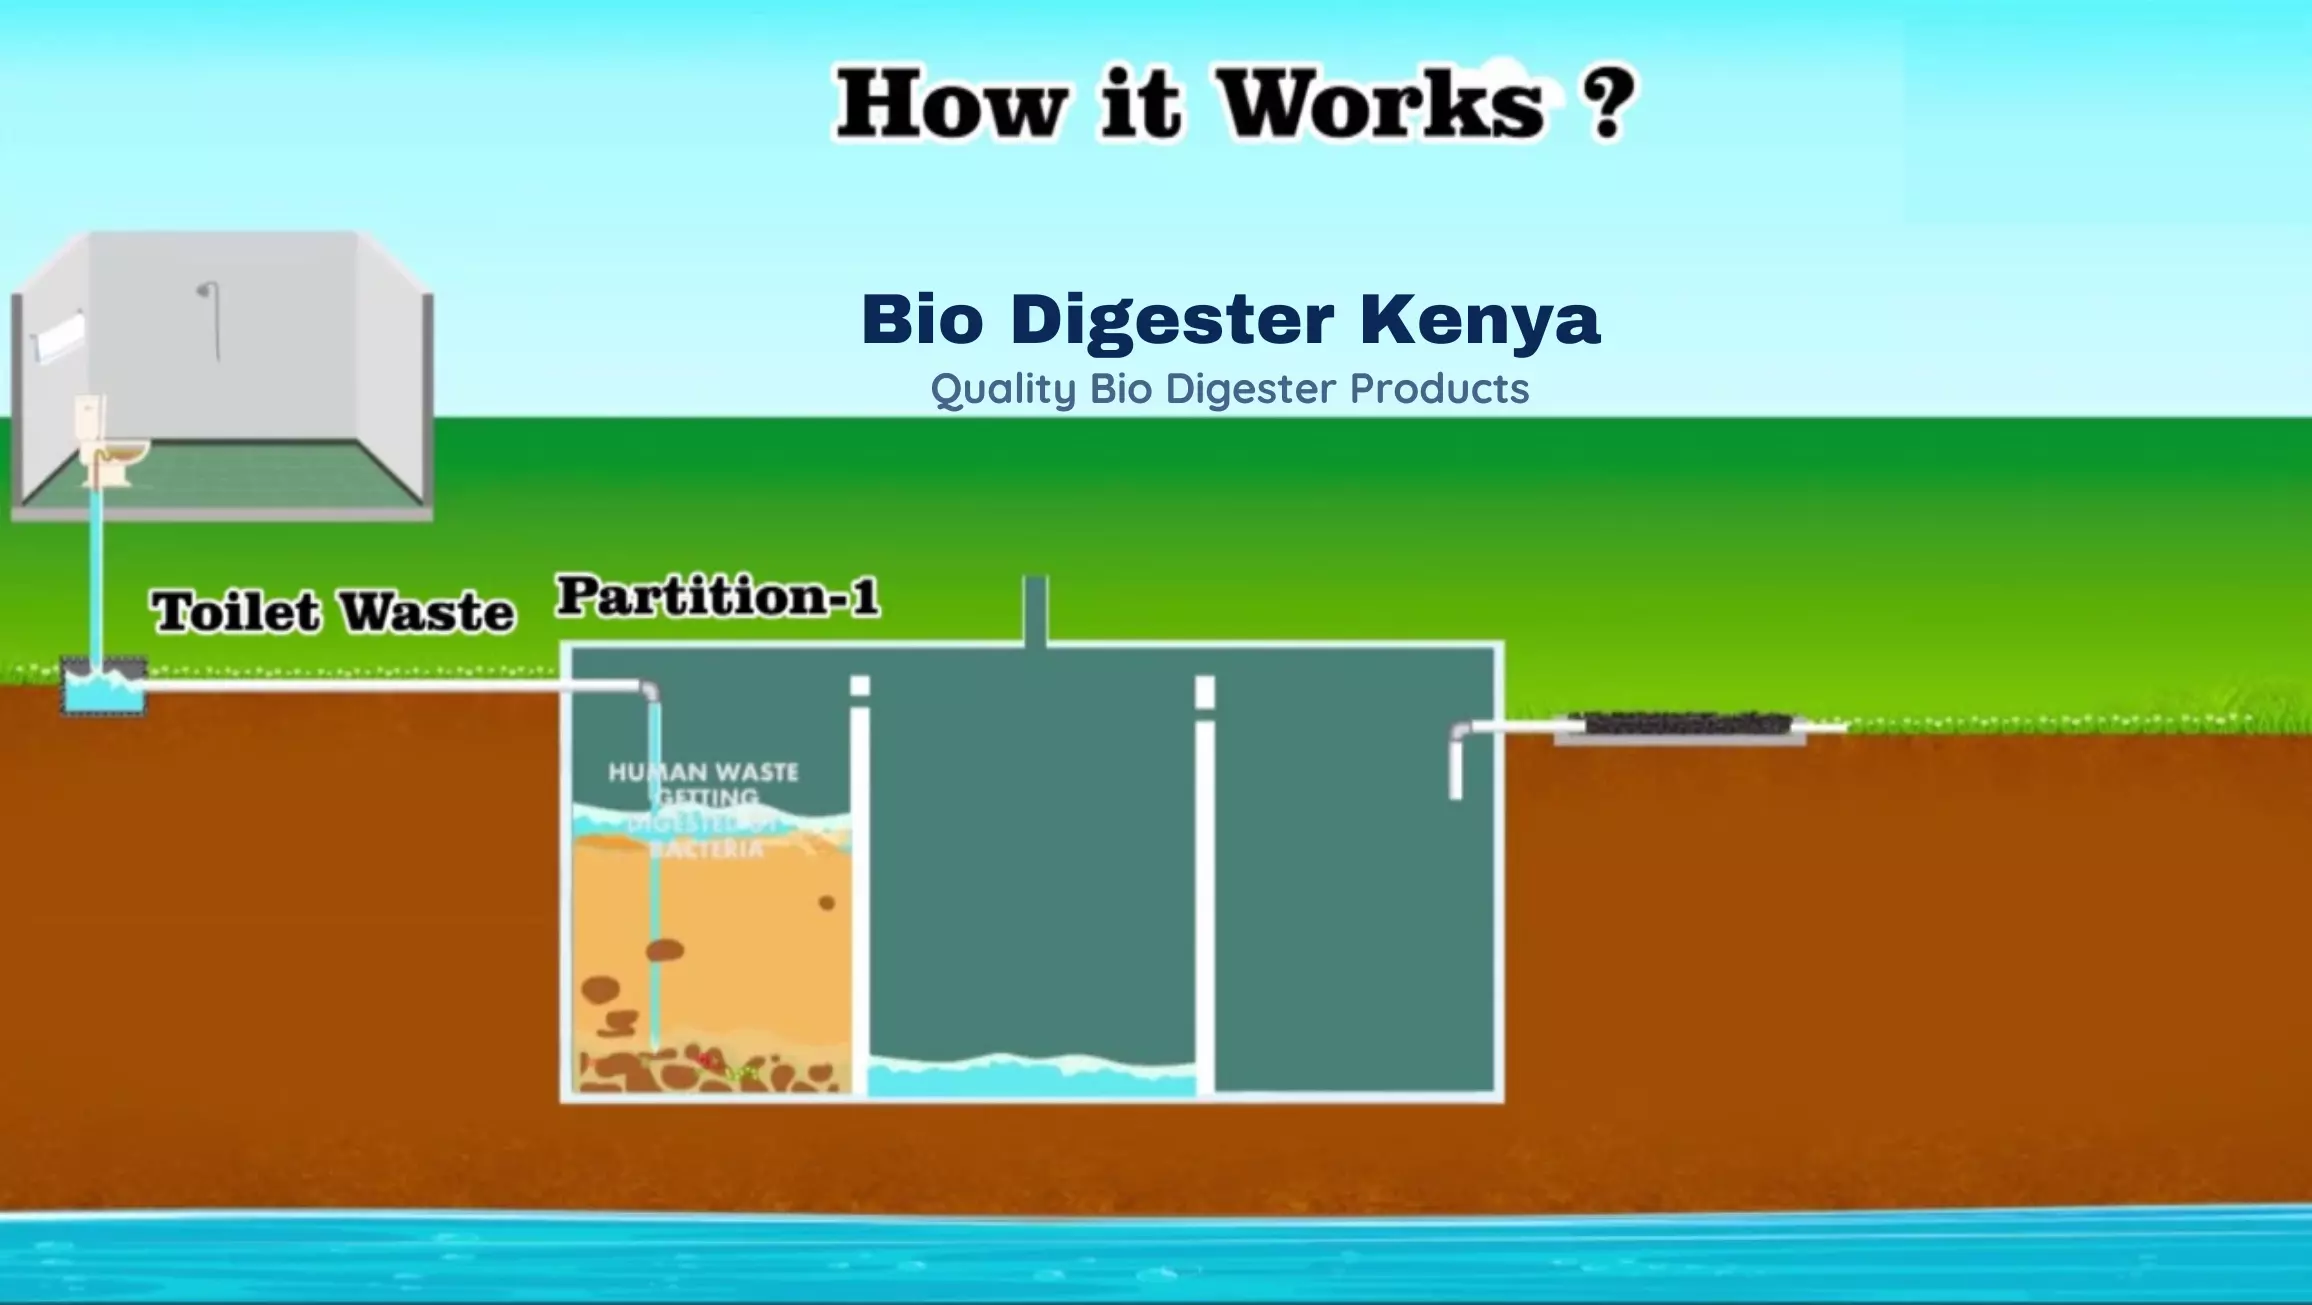 How a Bio Digester Works - Bio Digester Kenya